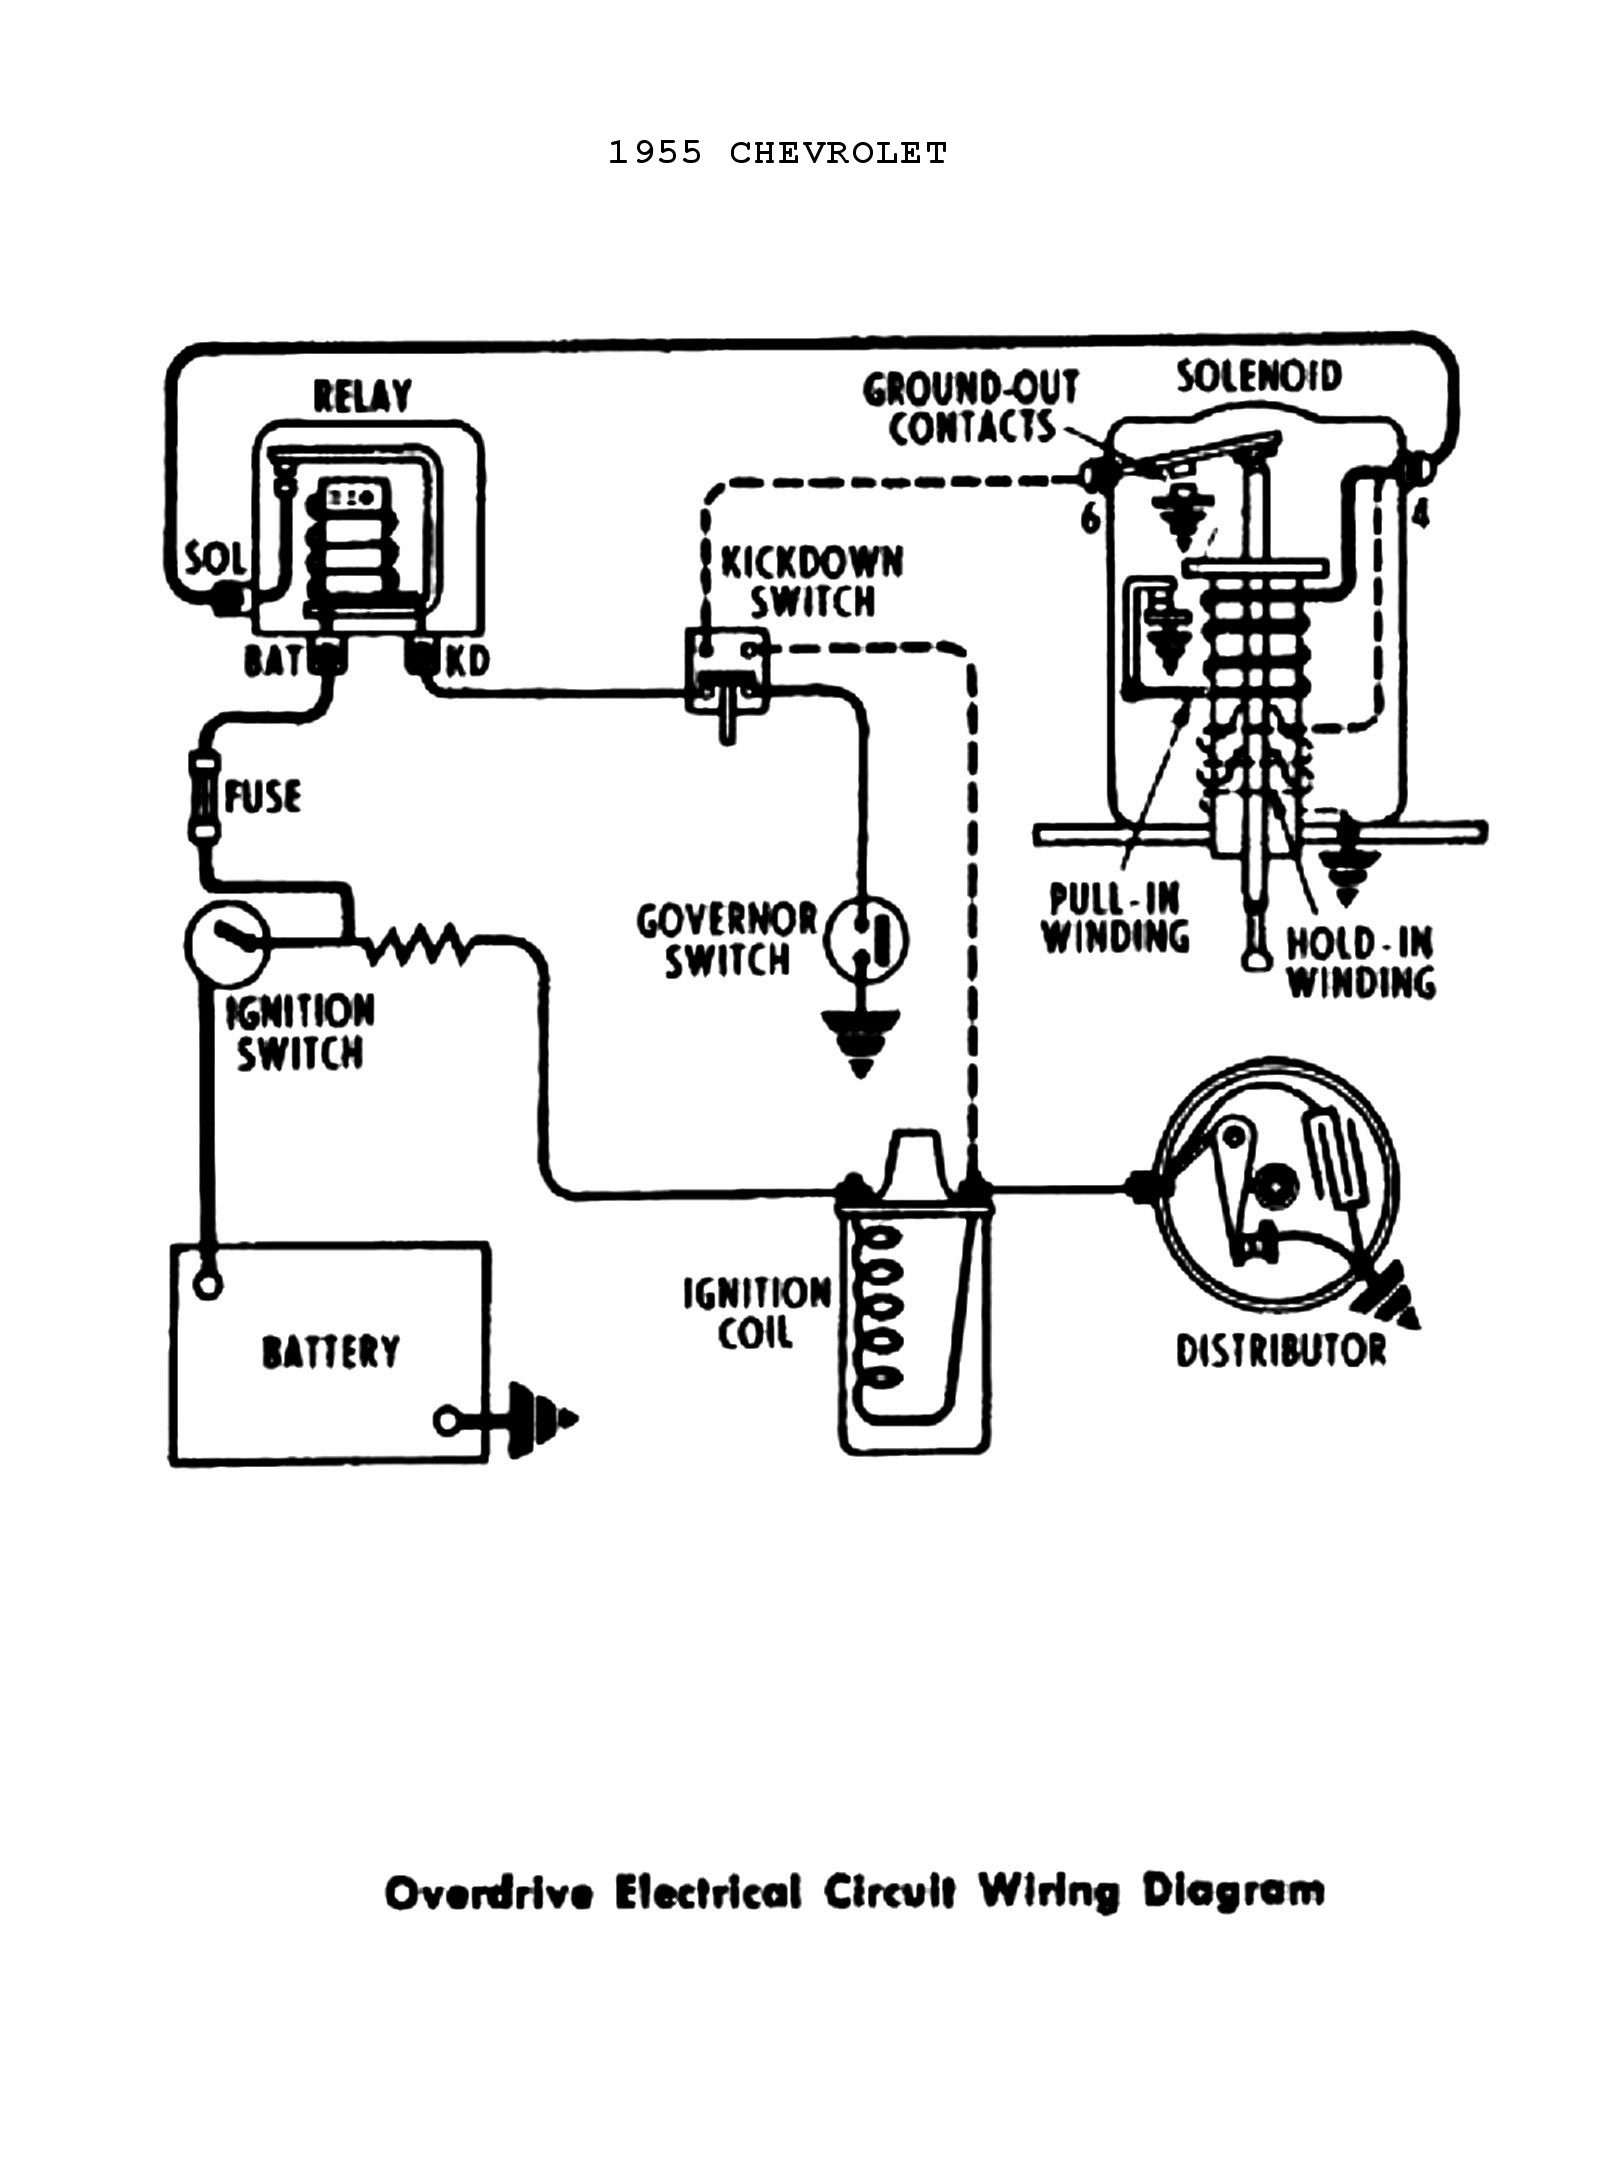 1957 Chevy Truck Wiring Diagram 1957 Chevy Heater Wiring Diagram Wiring Diagrams Of 1957 Chevy Truck Wiring Diagram